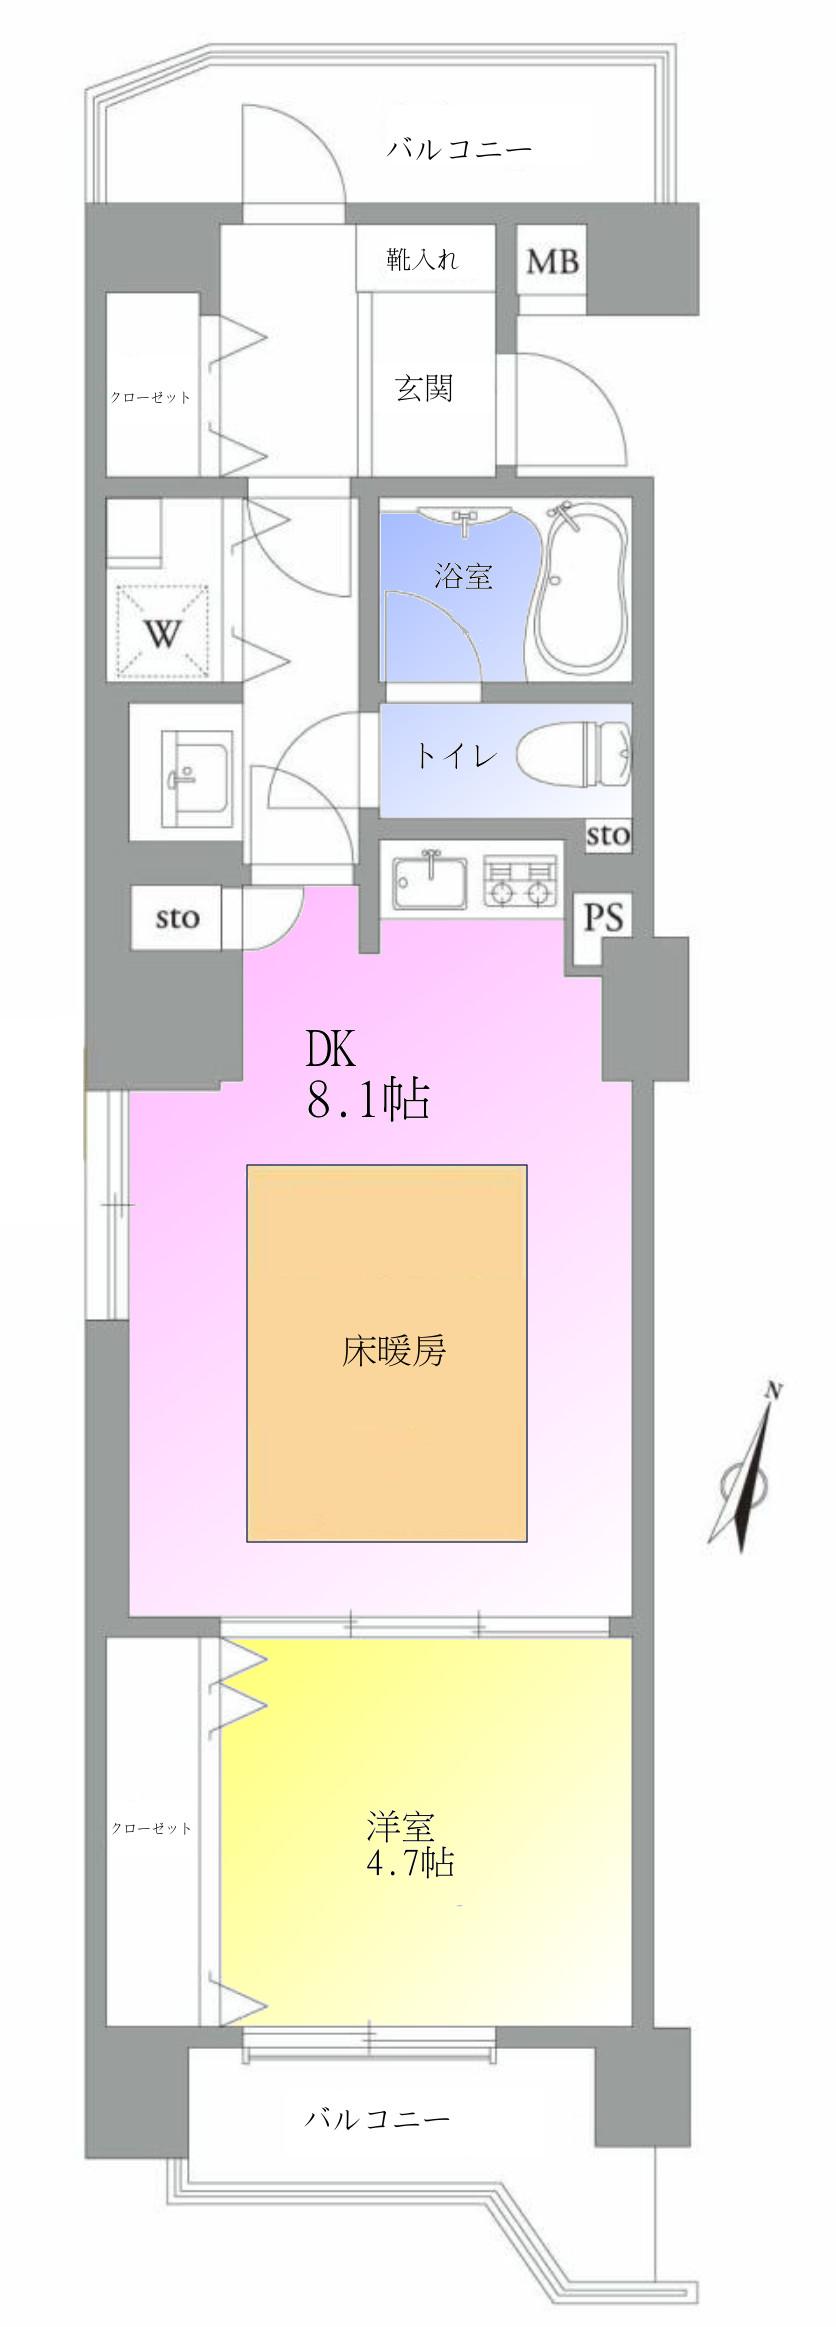 Floor plan. 1DK, Price 23.8 million yen, Occupied area 47.04 sq m , Balcony area 3.28 sq m